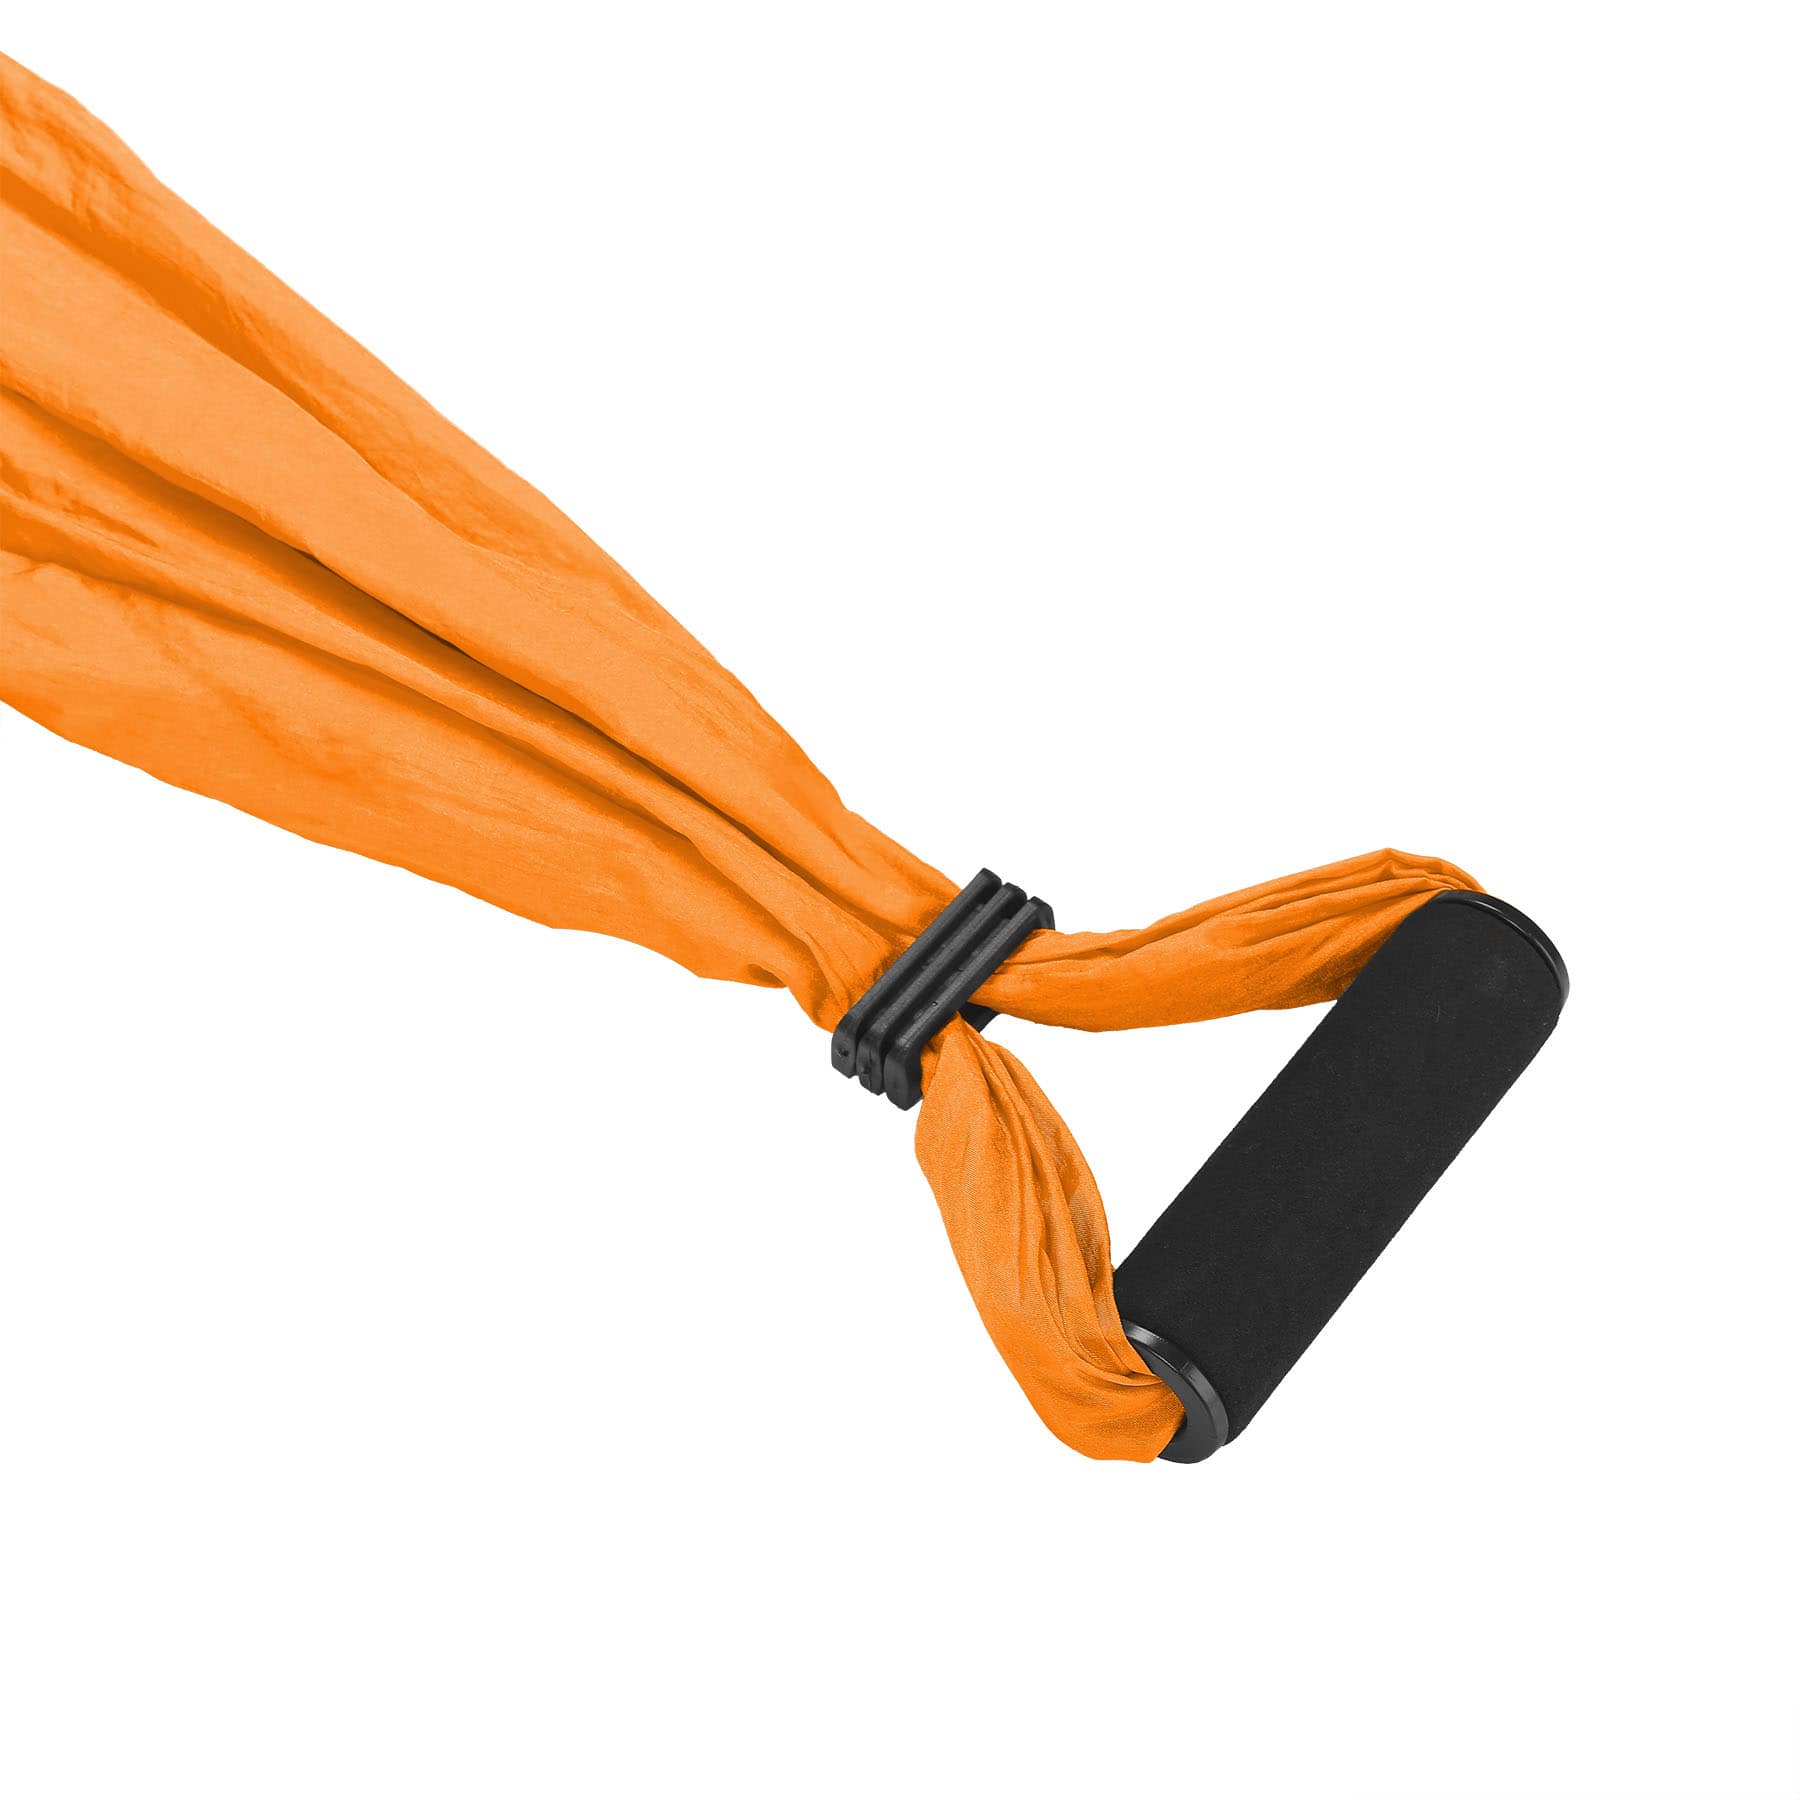 Aerial Yoga Hammock Swing Set - Flying Yoga Inversion Tool Antigravity  Ceiling Hanging Yoga Sling,Orange